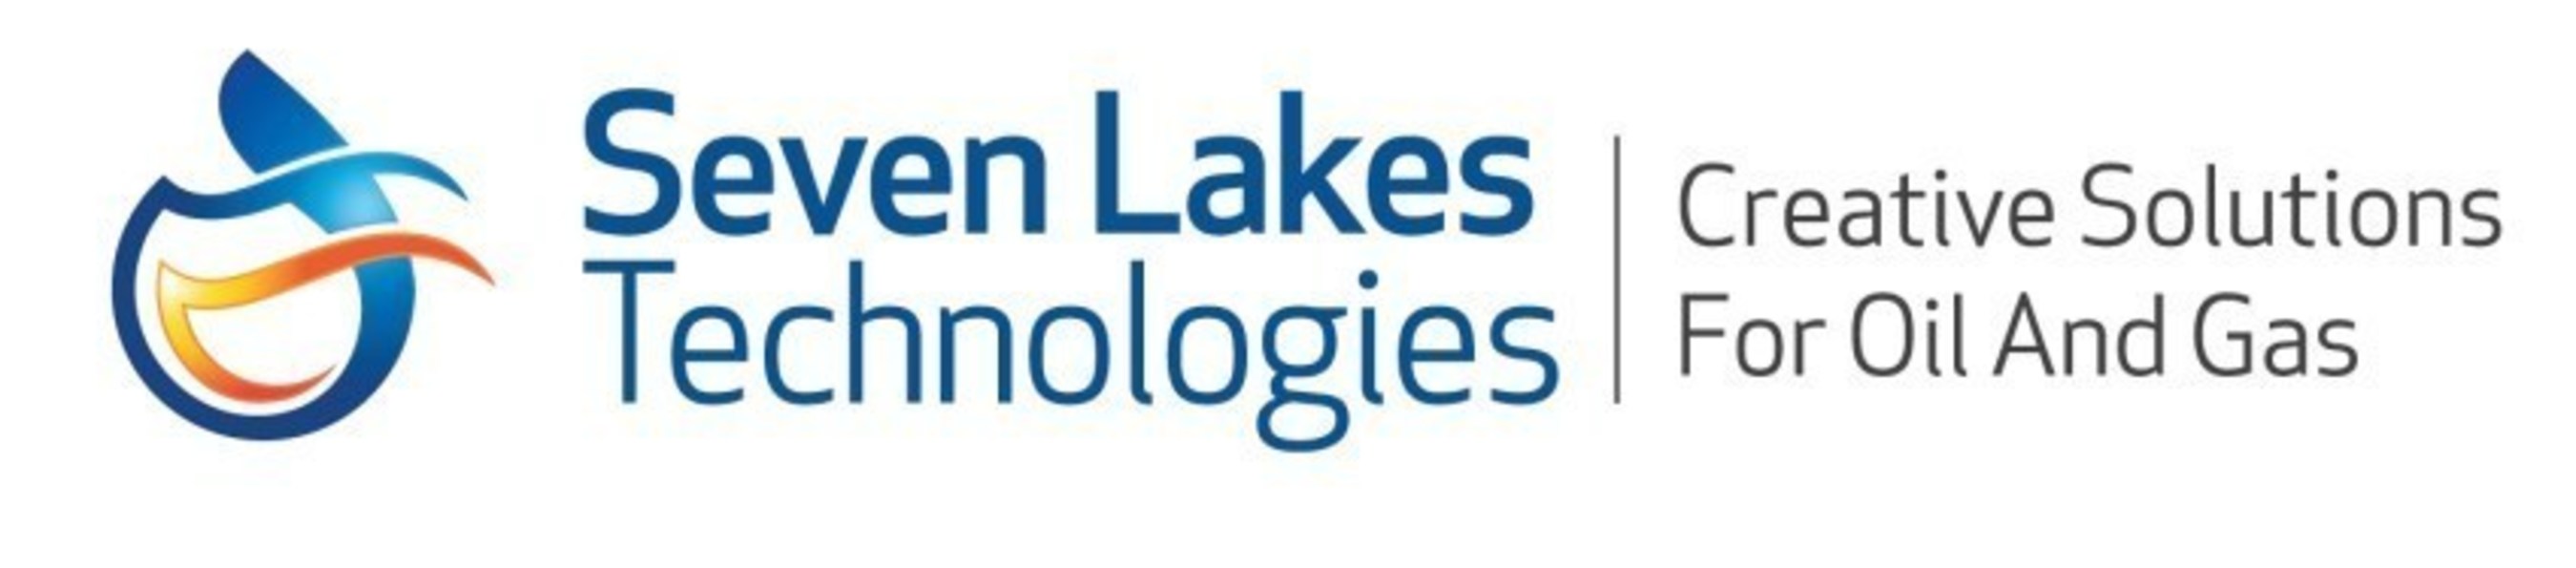 seven-lakes-technologies-expands-leadership-team